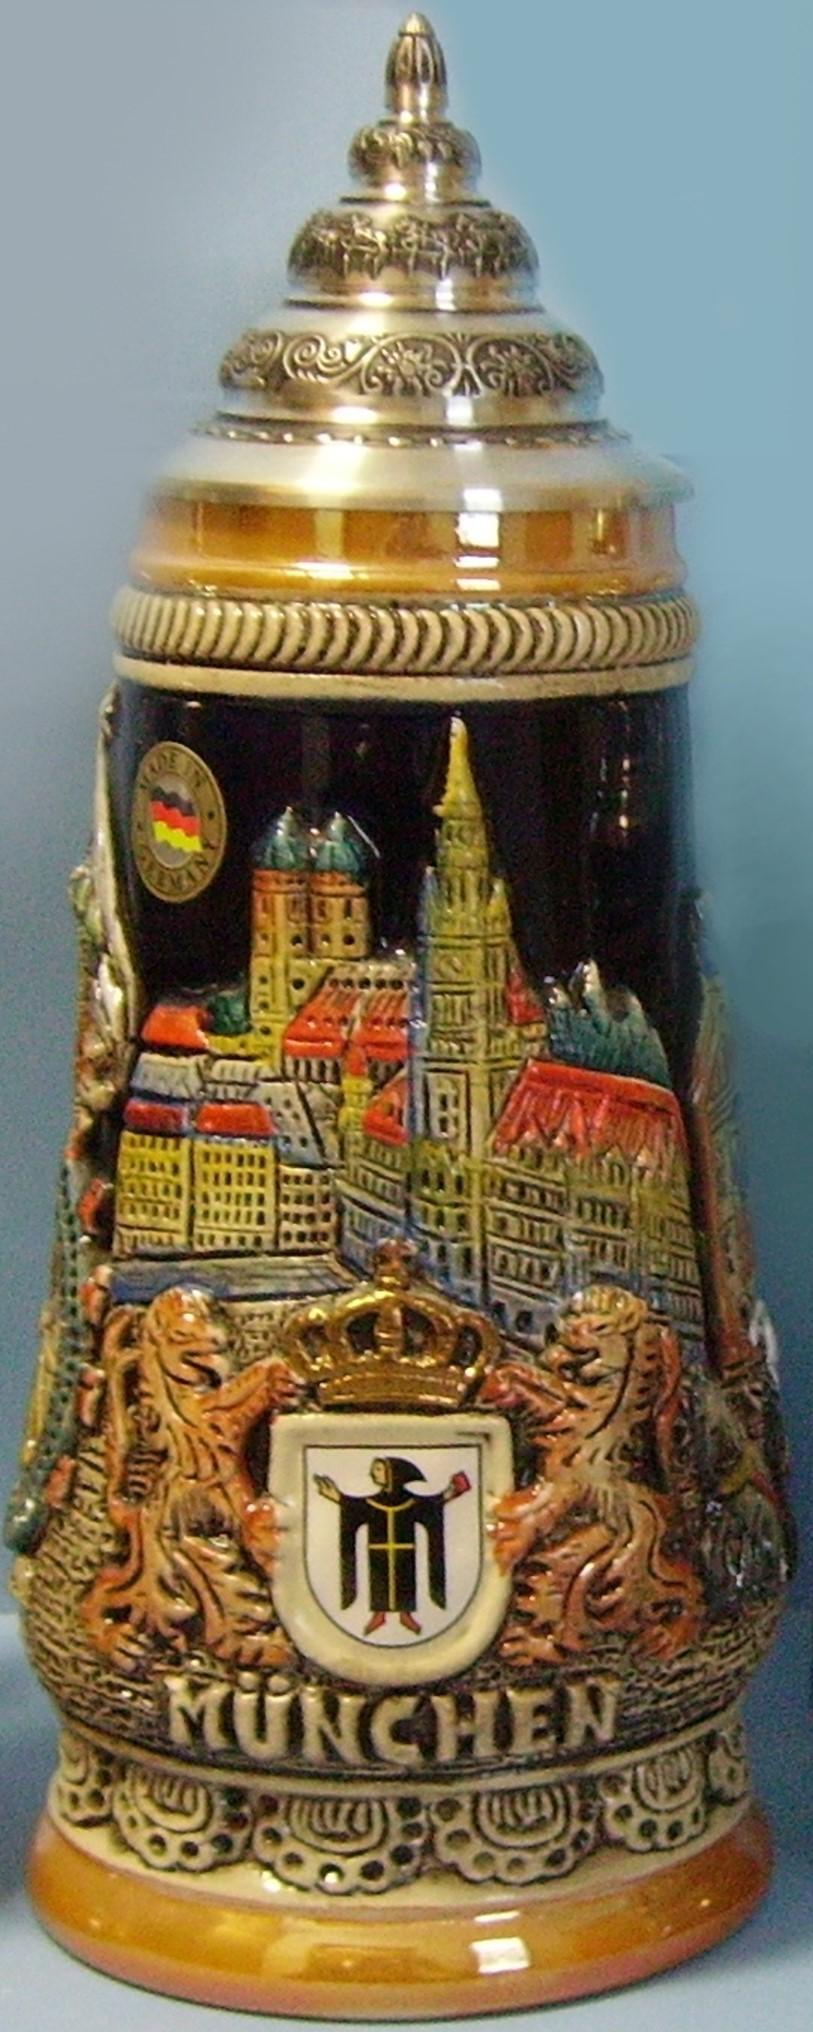 Foto Jarra de cerveza alemana Múnich con relieve, jarra 0,5 litros